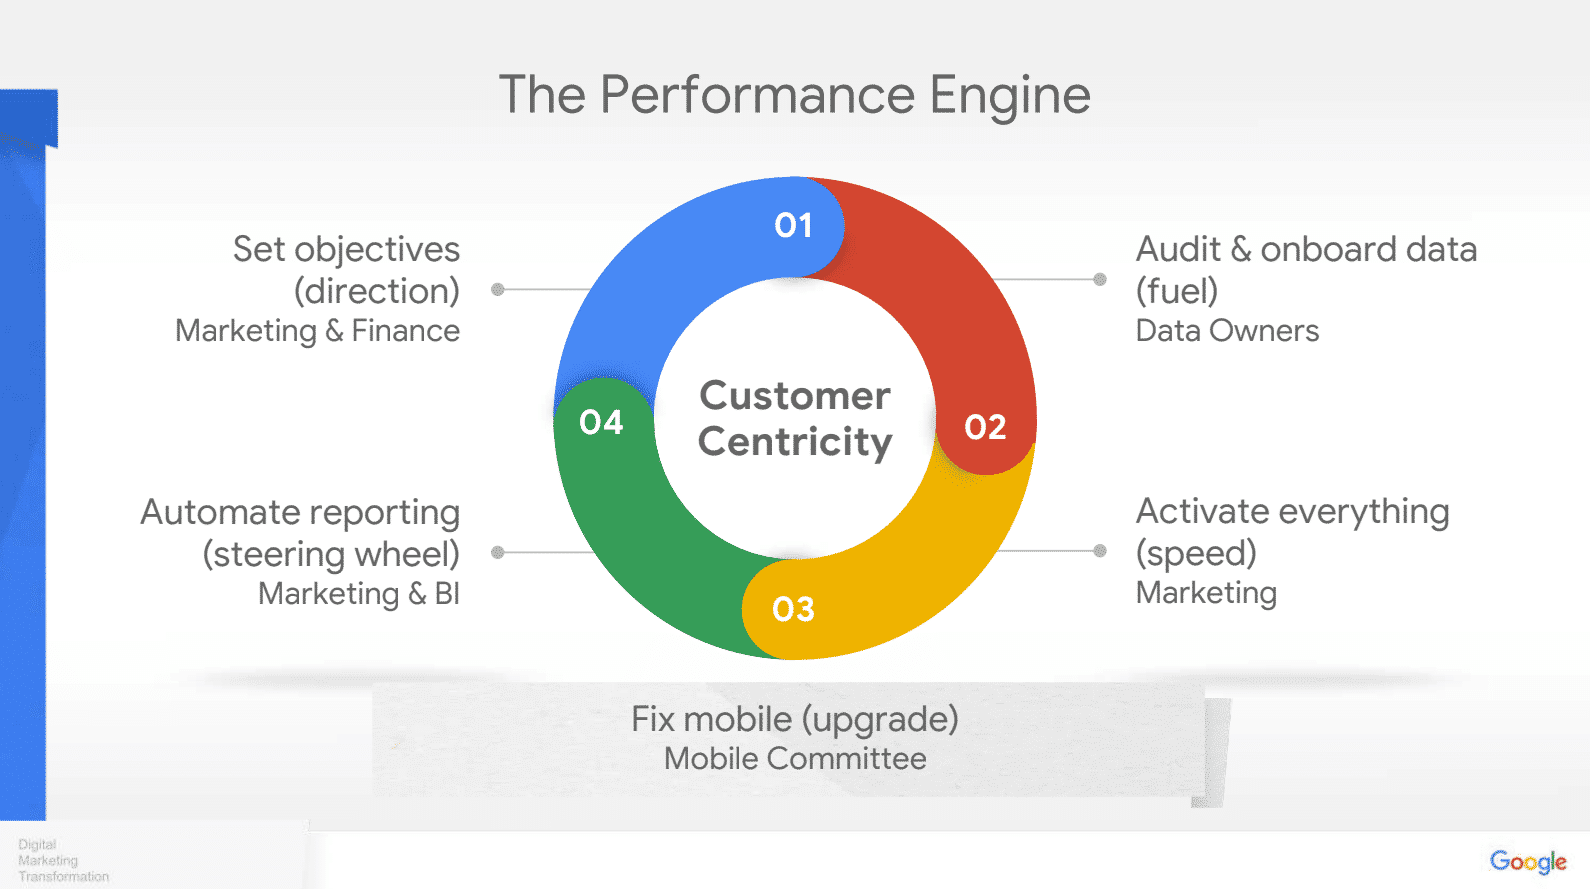 The performance engine